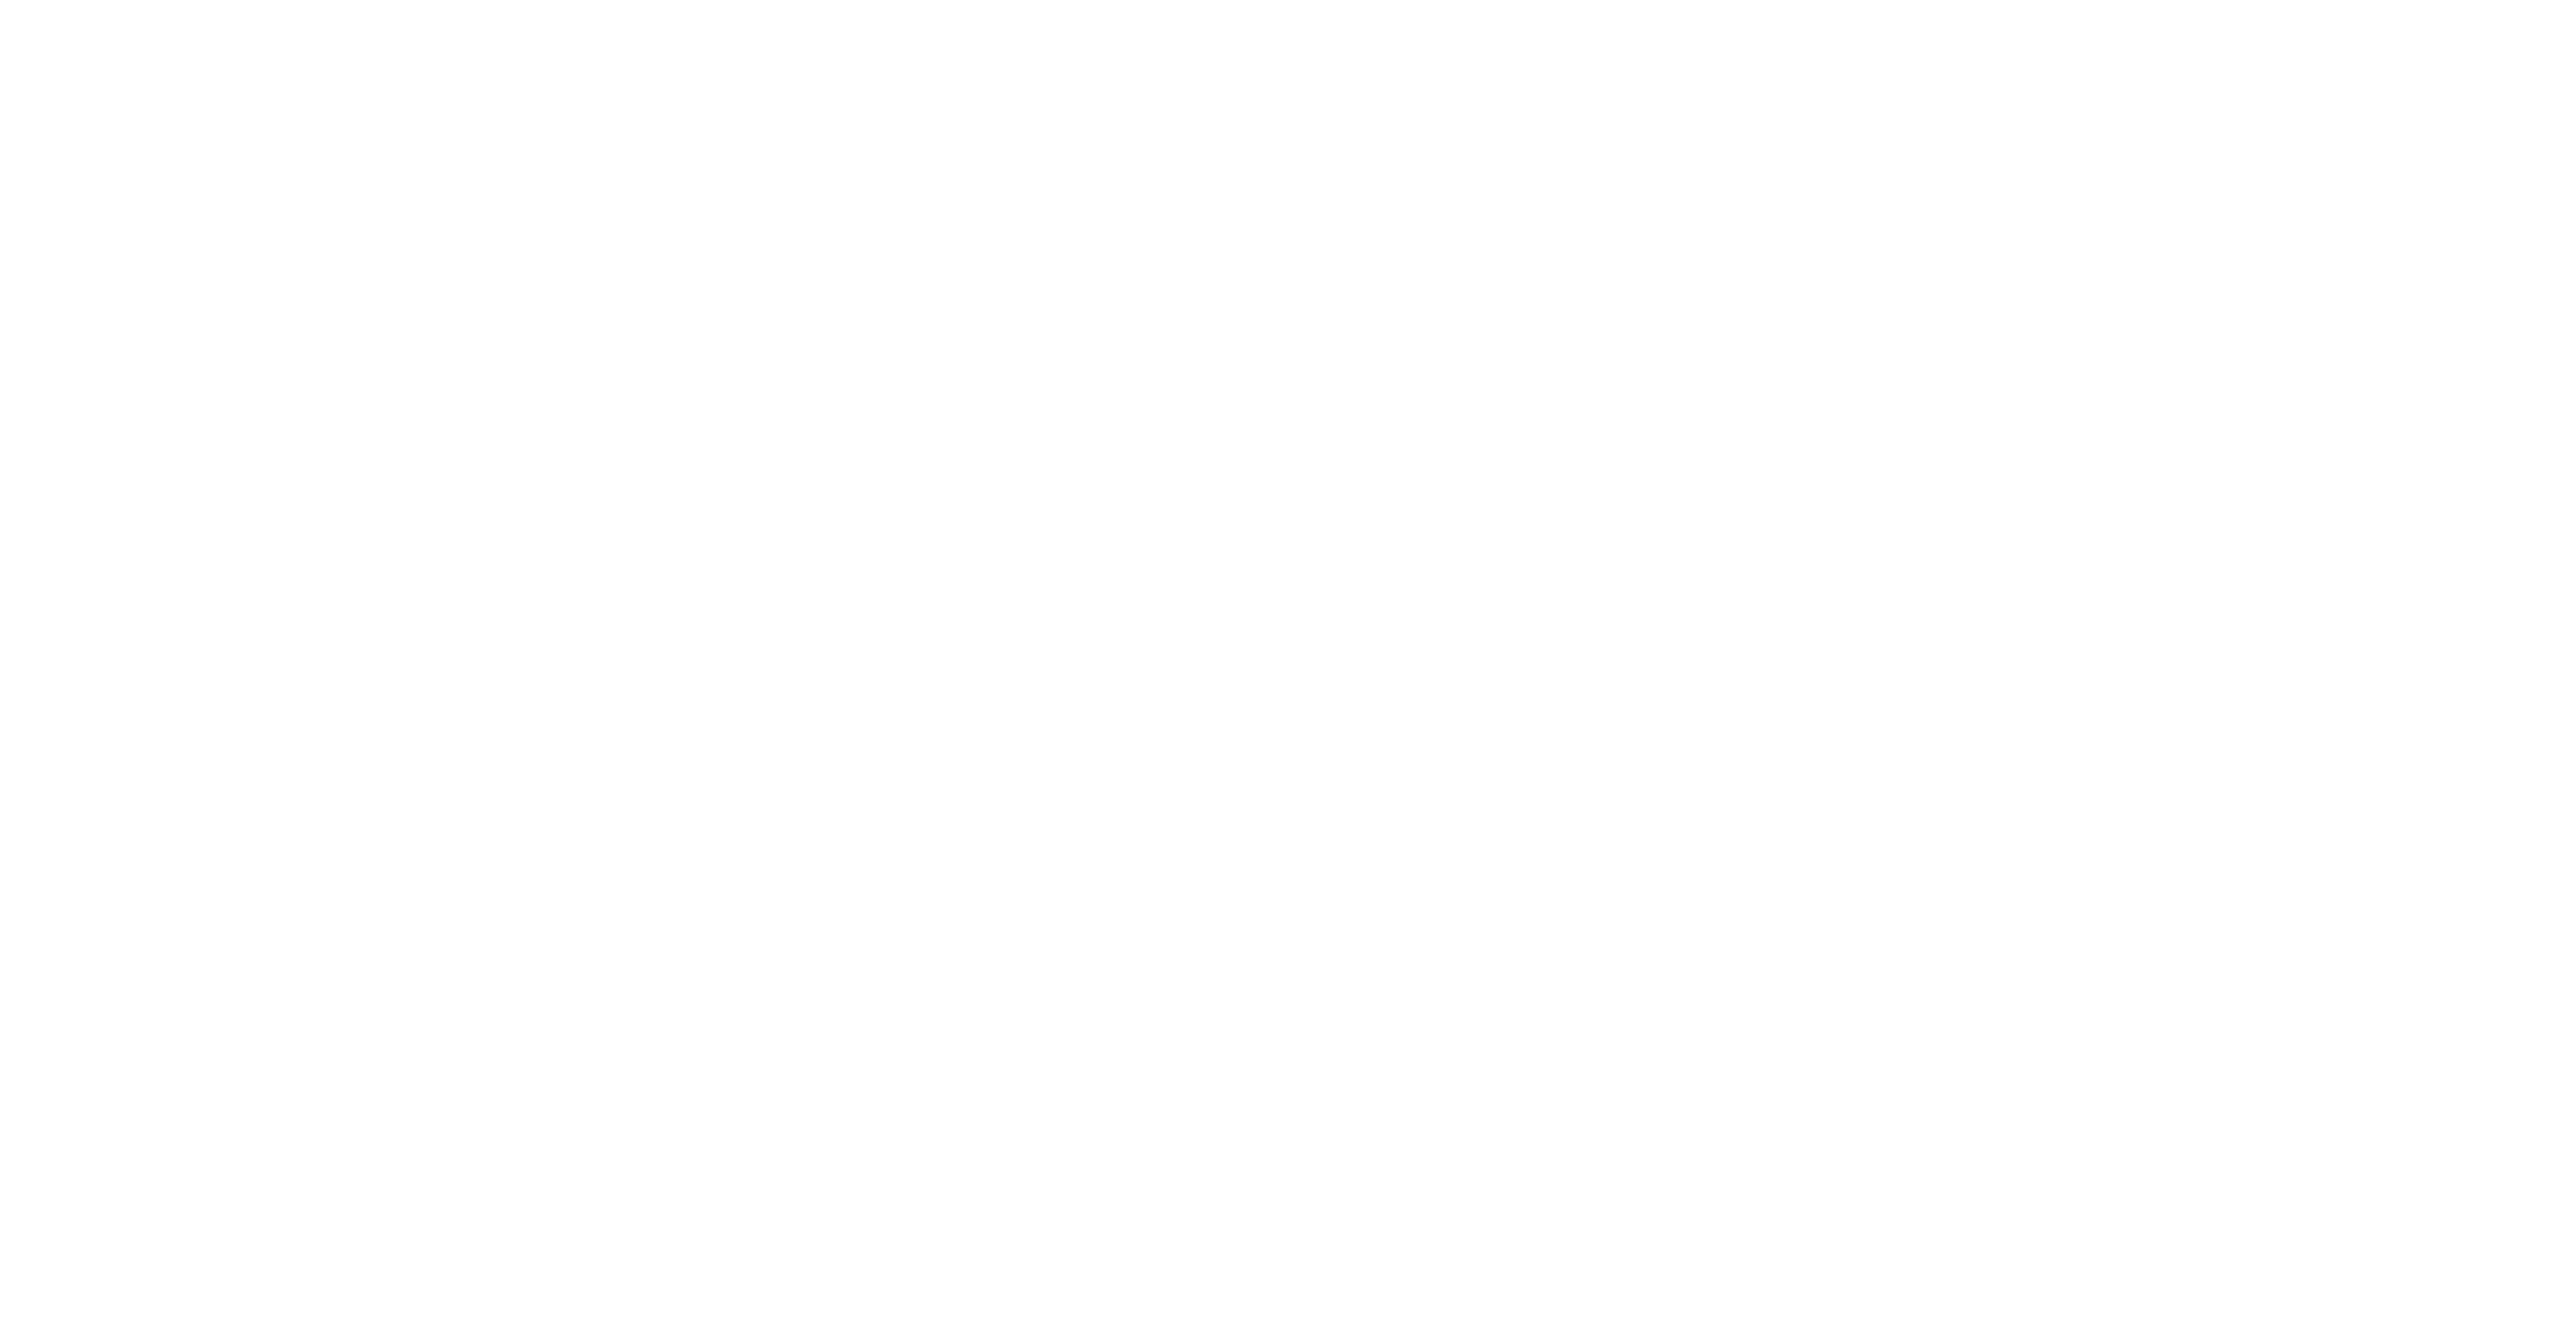 Save Time. Save Money.